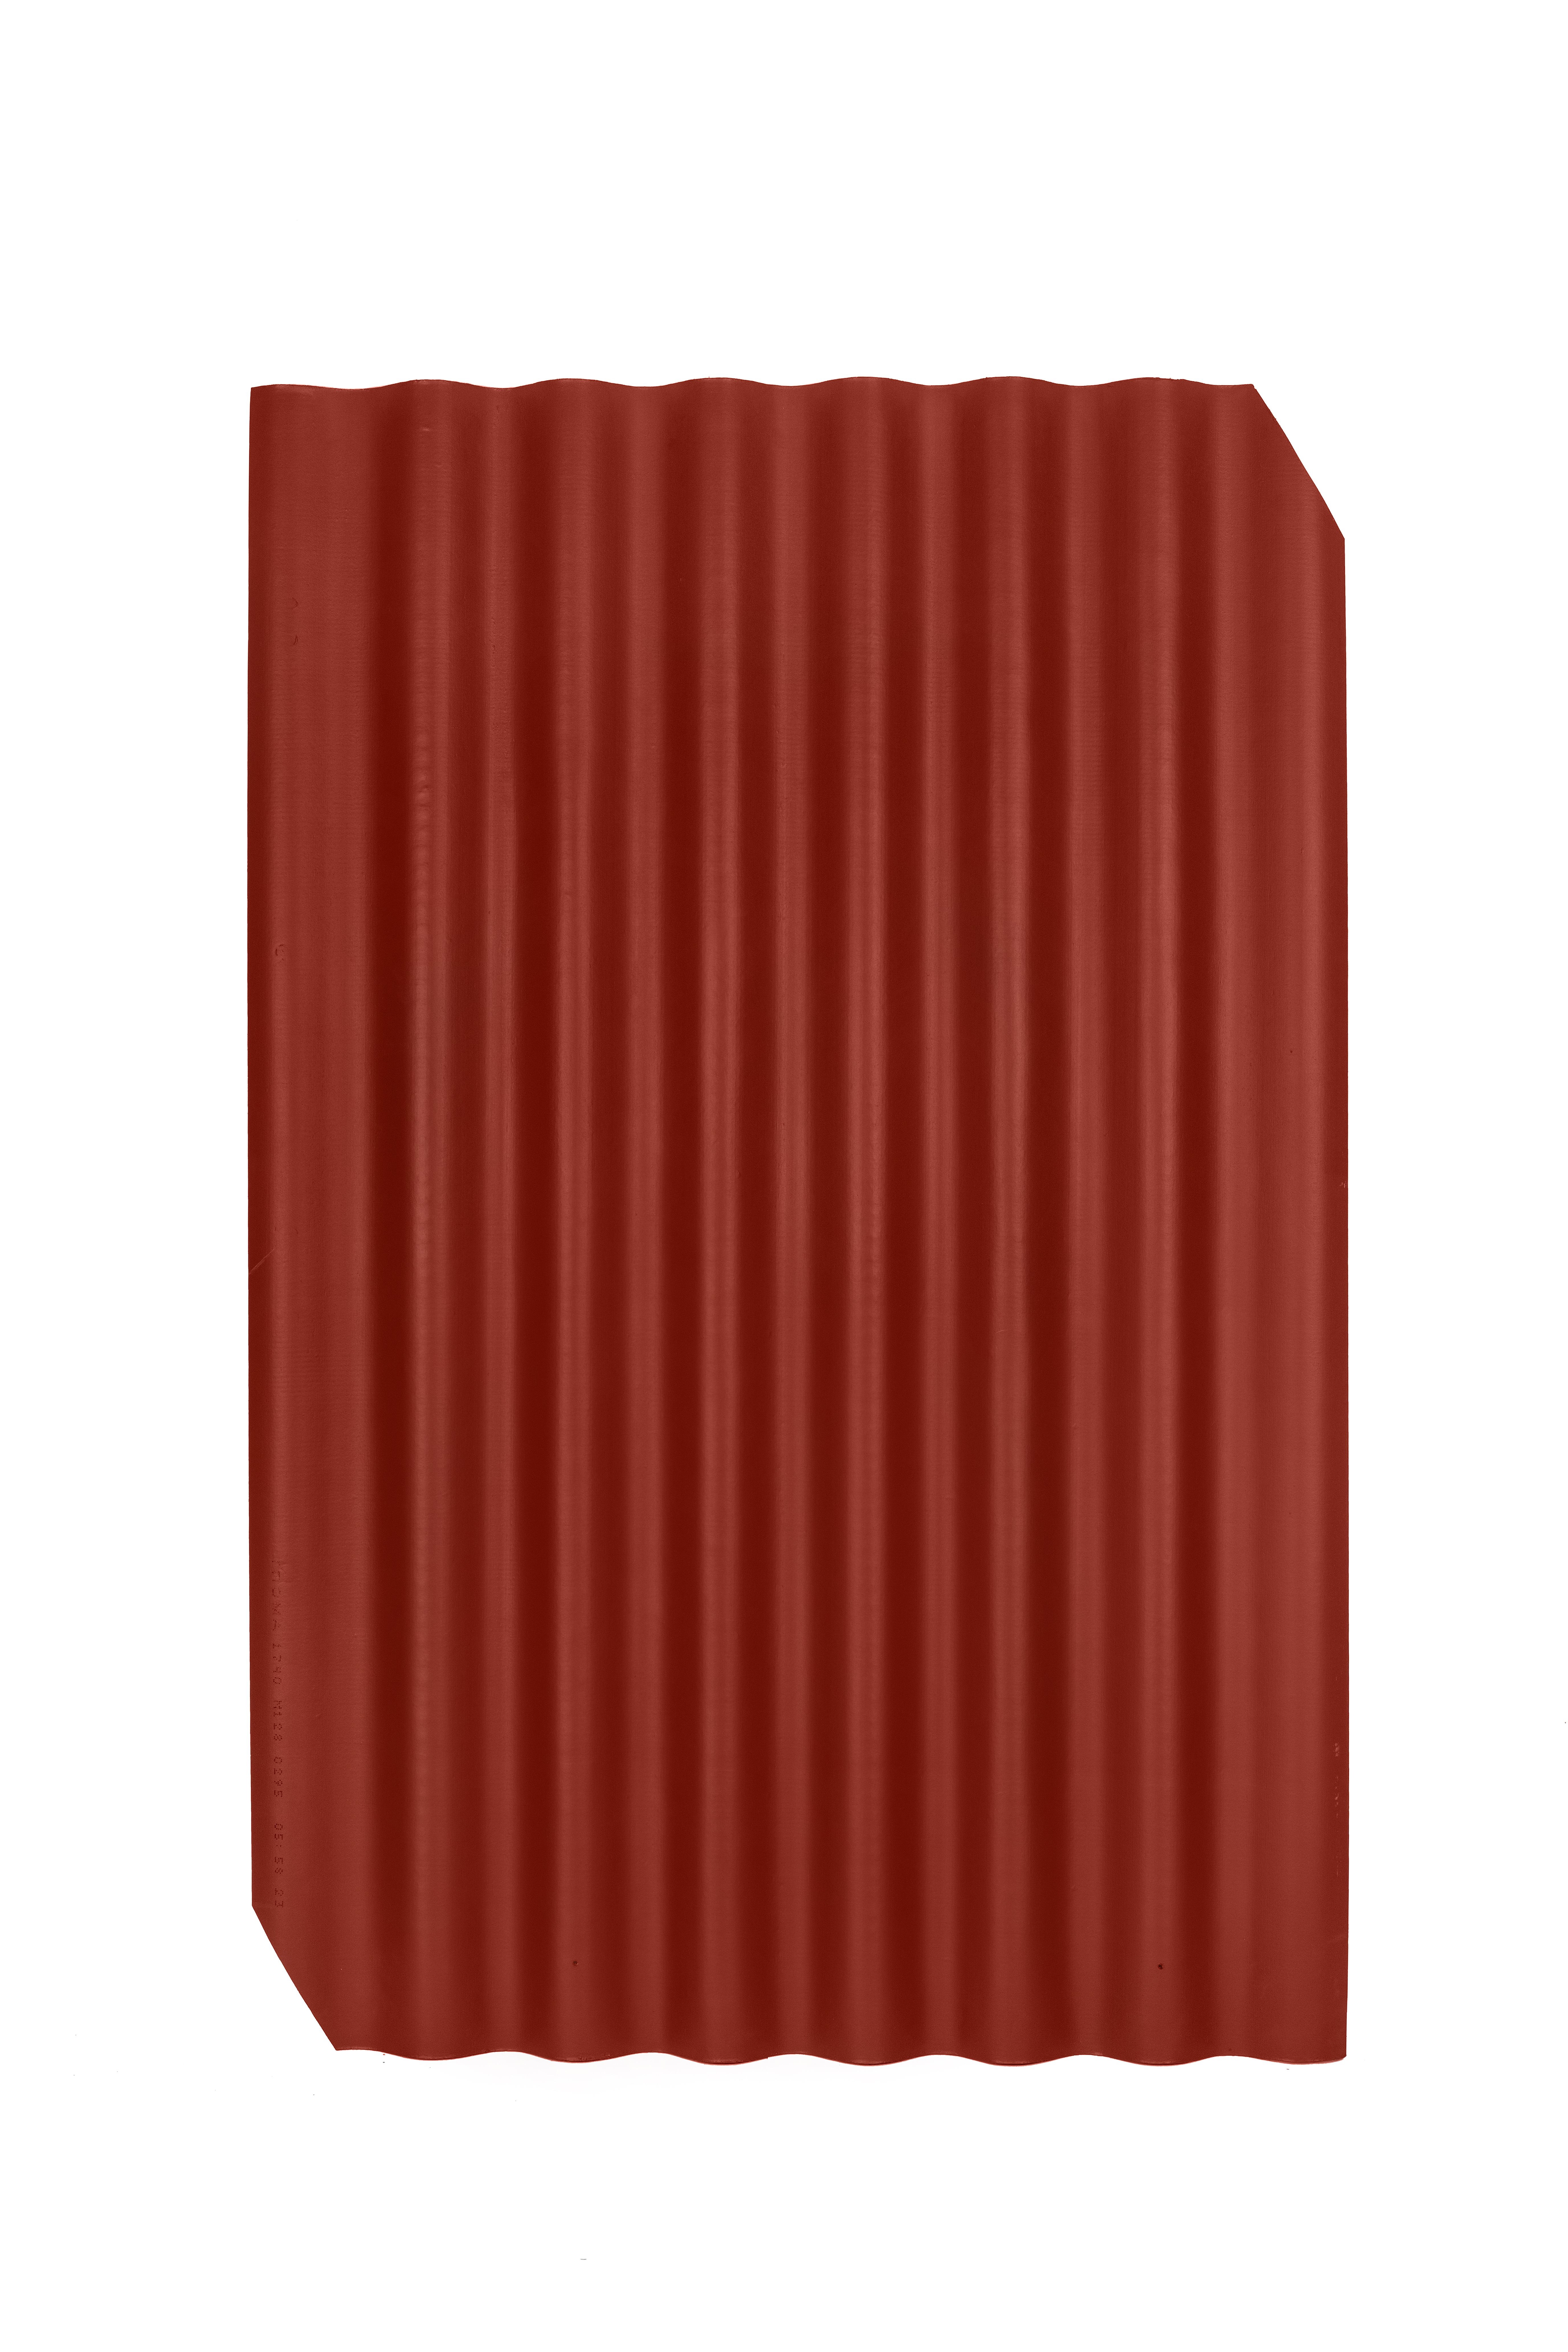 Черепица фиброцементная ПРОФИ ТИСМА 40/150-8-1740х1130х5,8 красный M128 ТУ